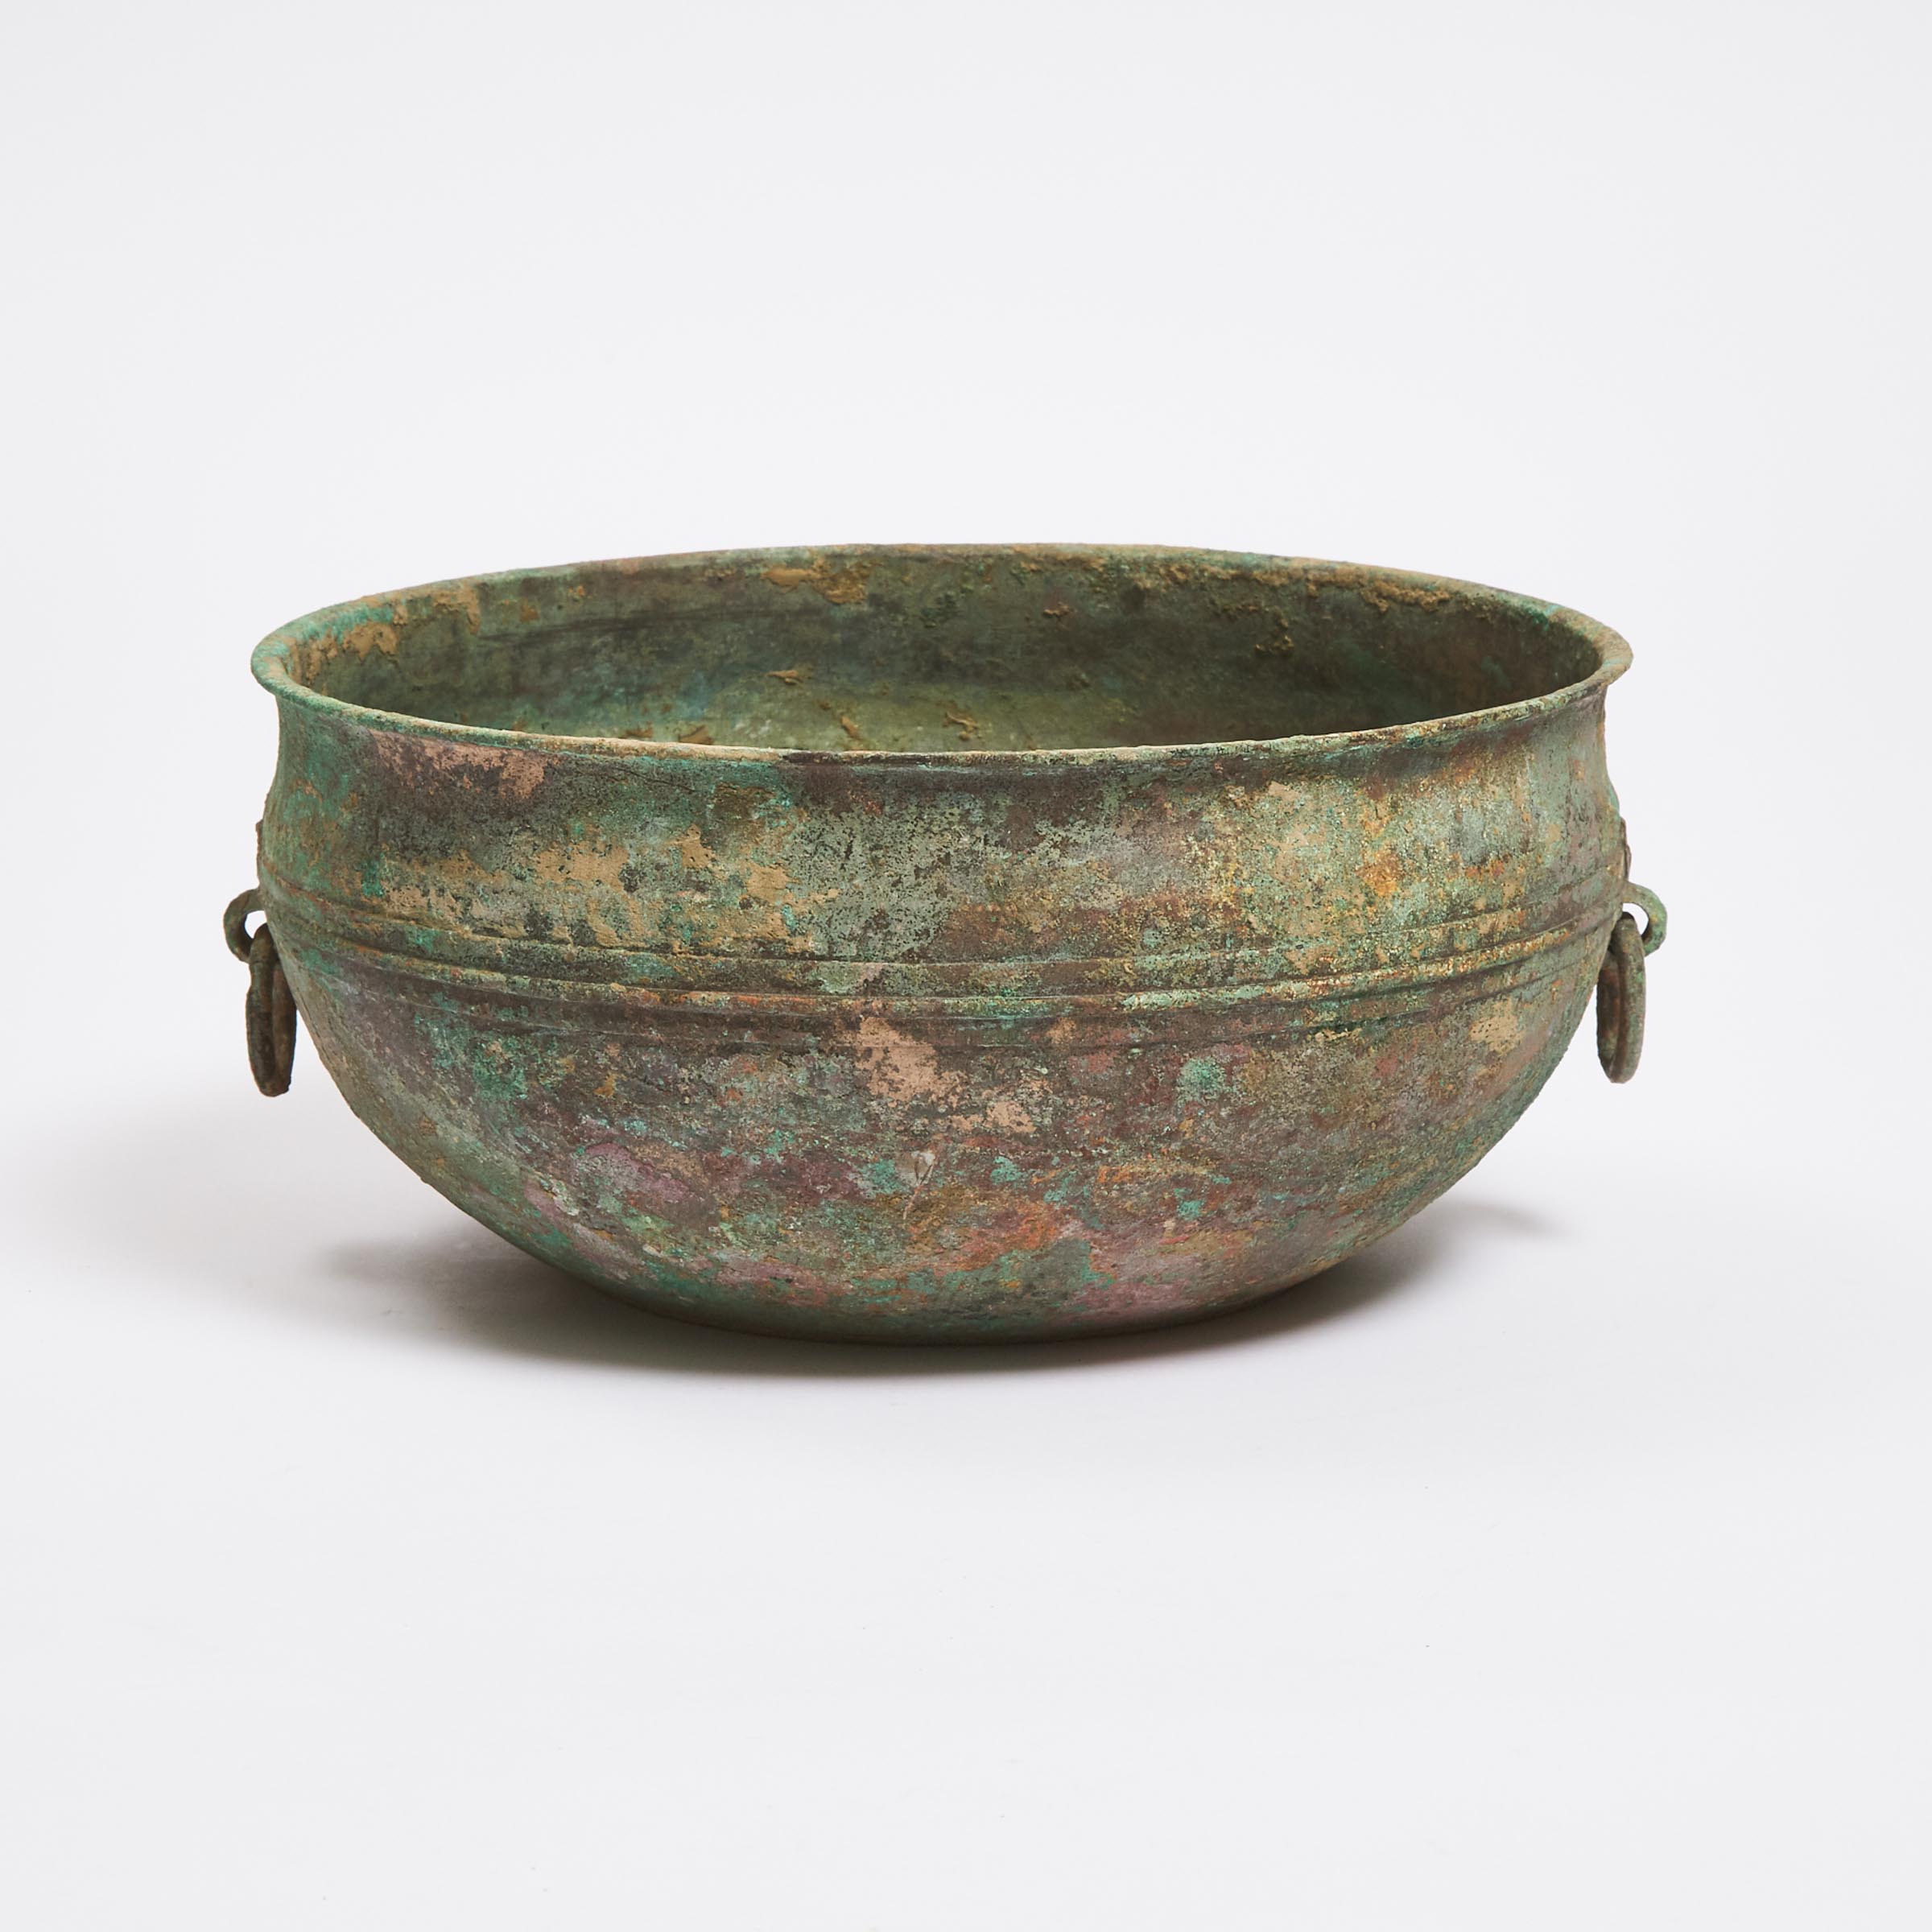 A Bronze Ritual Food Vessel, Han Dynasty (206 BC-220 AD)